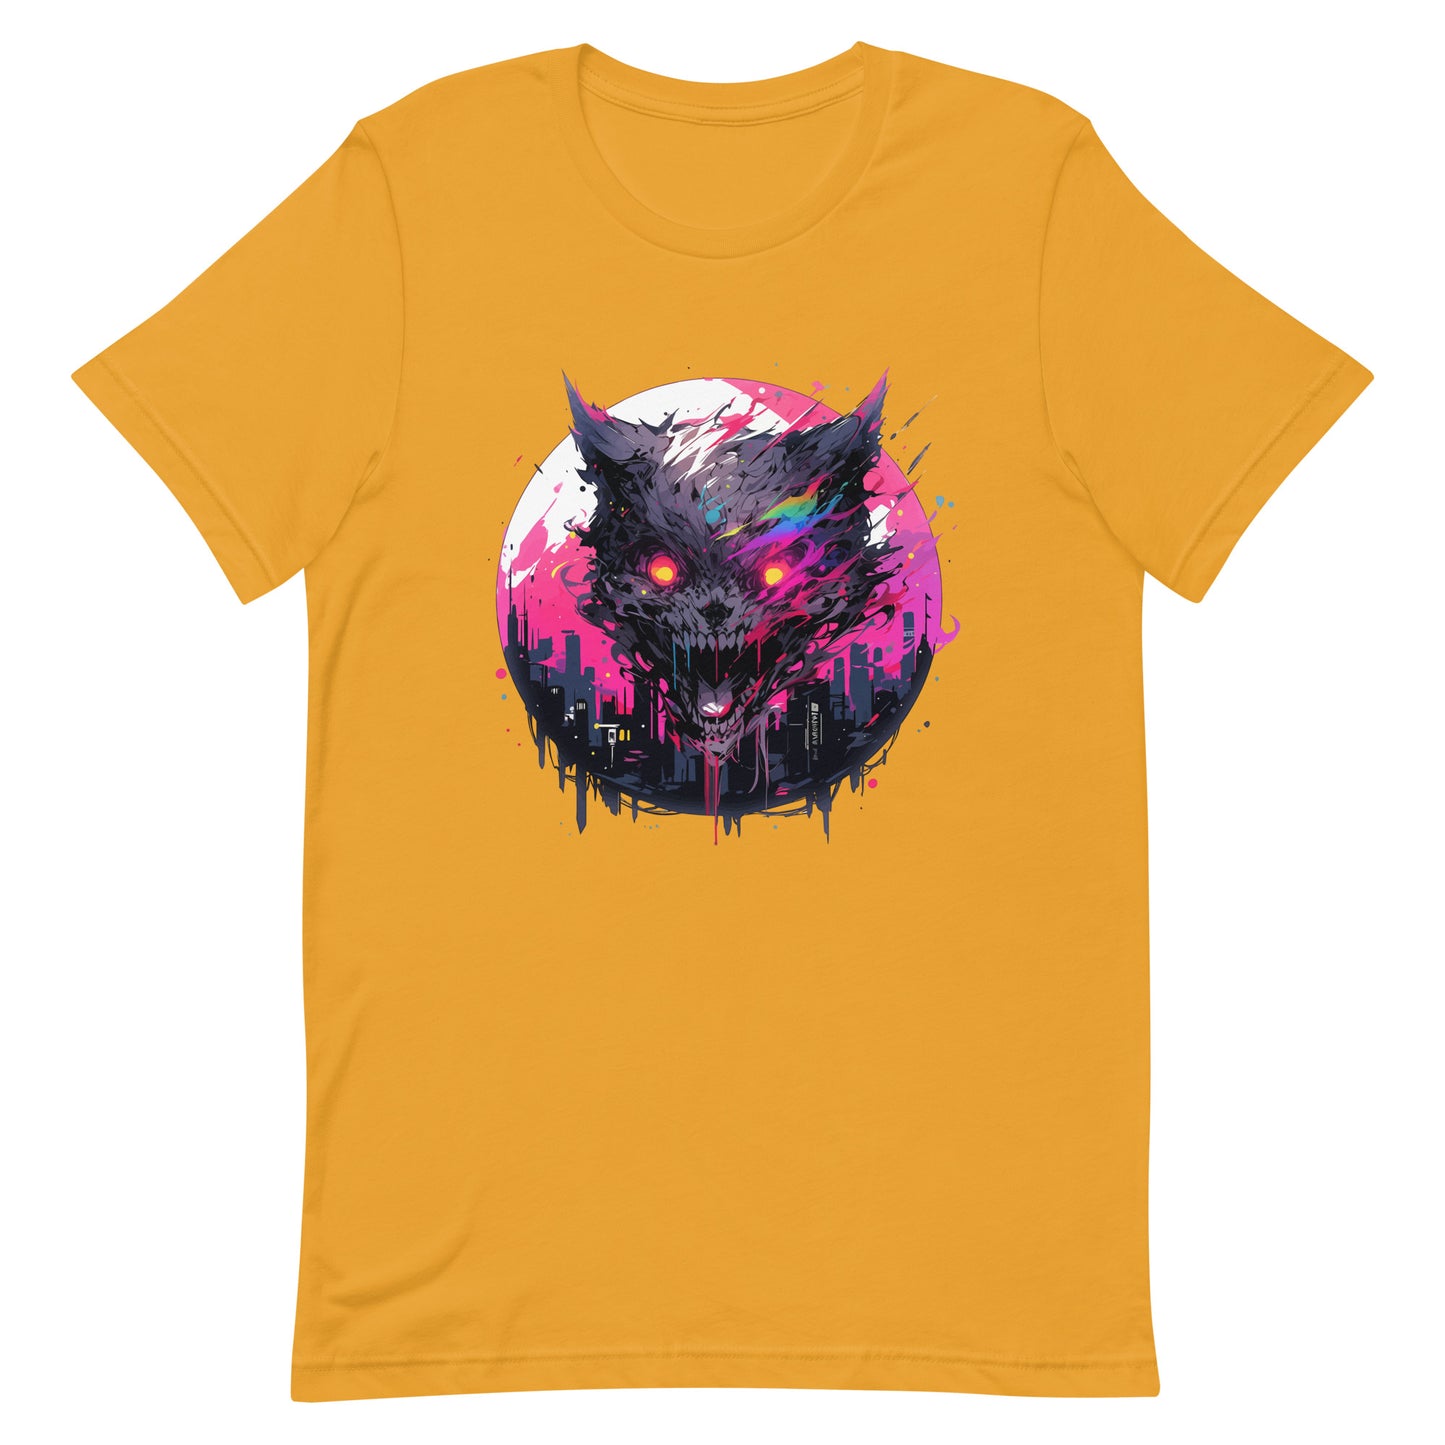 Burning eyes wildcat, Angry urban cat, Fantastic zombie kitty, Roar pet mutant - Unisex t-shirt